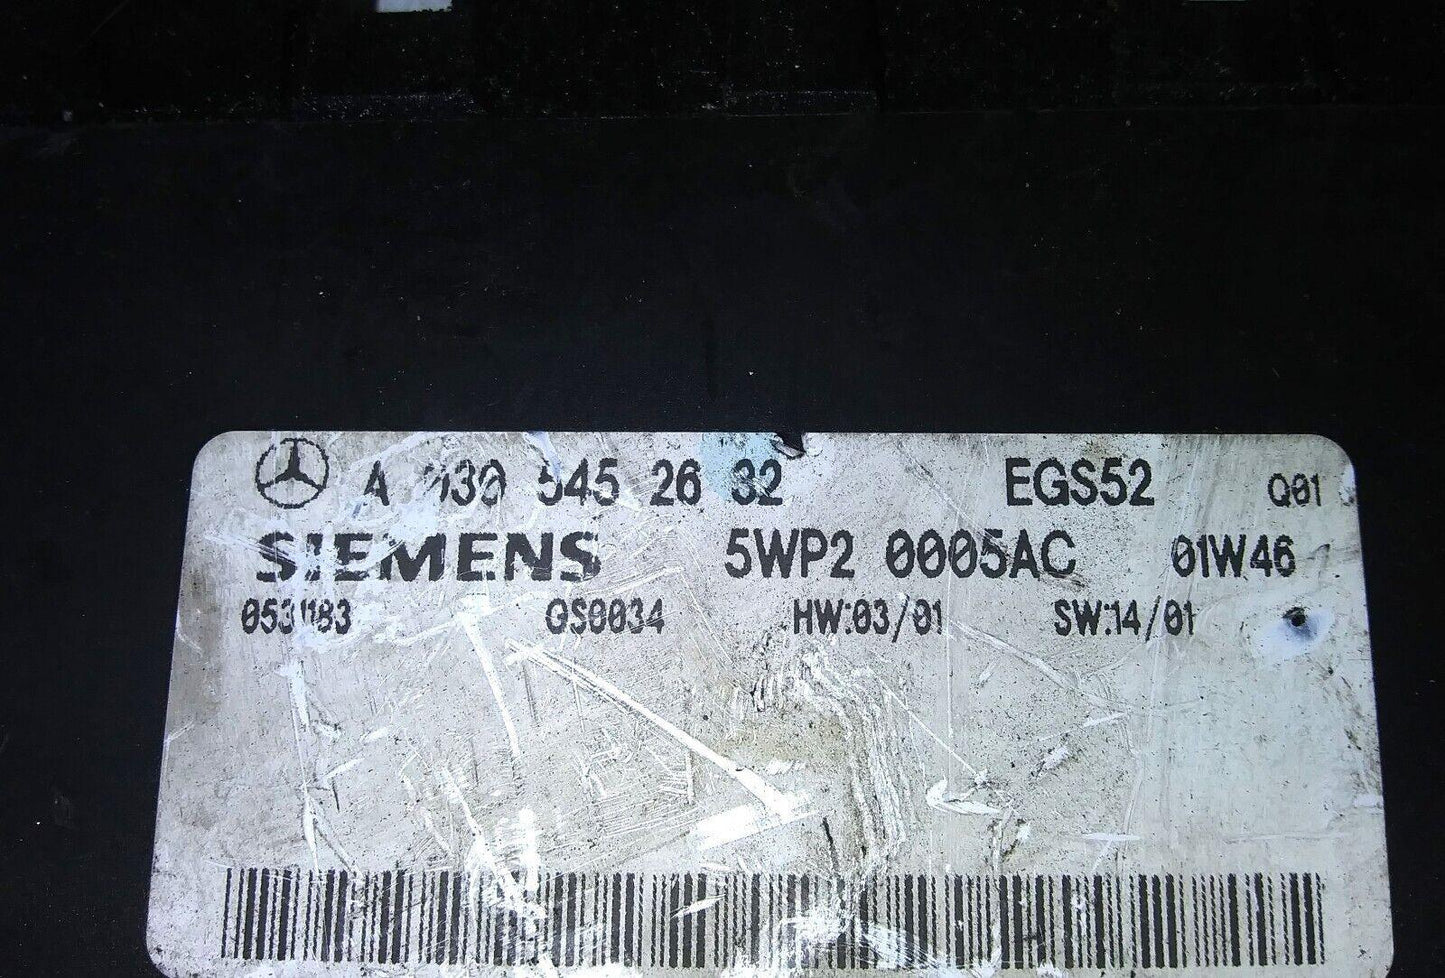 A 030 545 26 32 Mercedes ML320 TCM transmission computer - Swan Auto